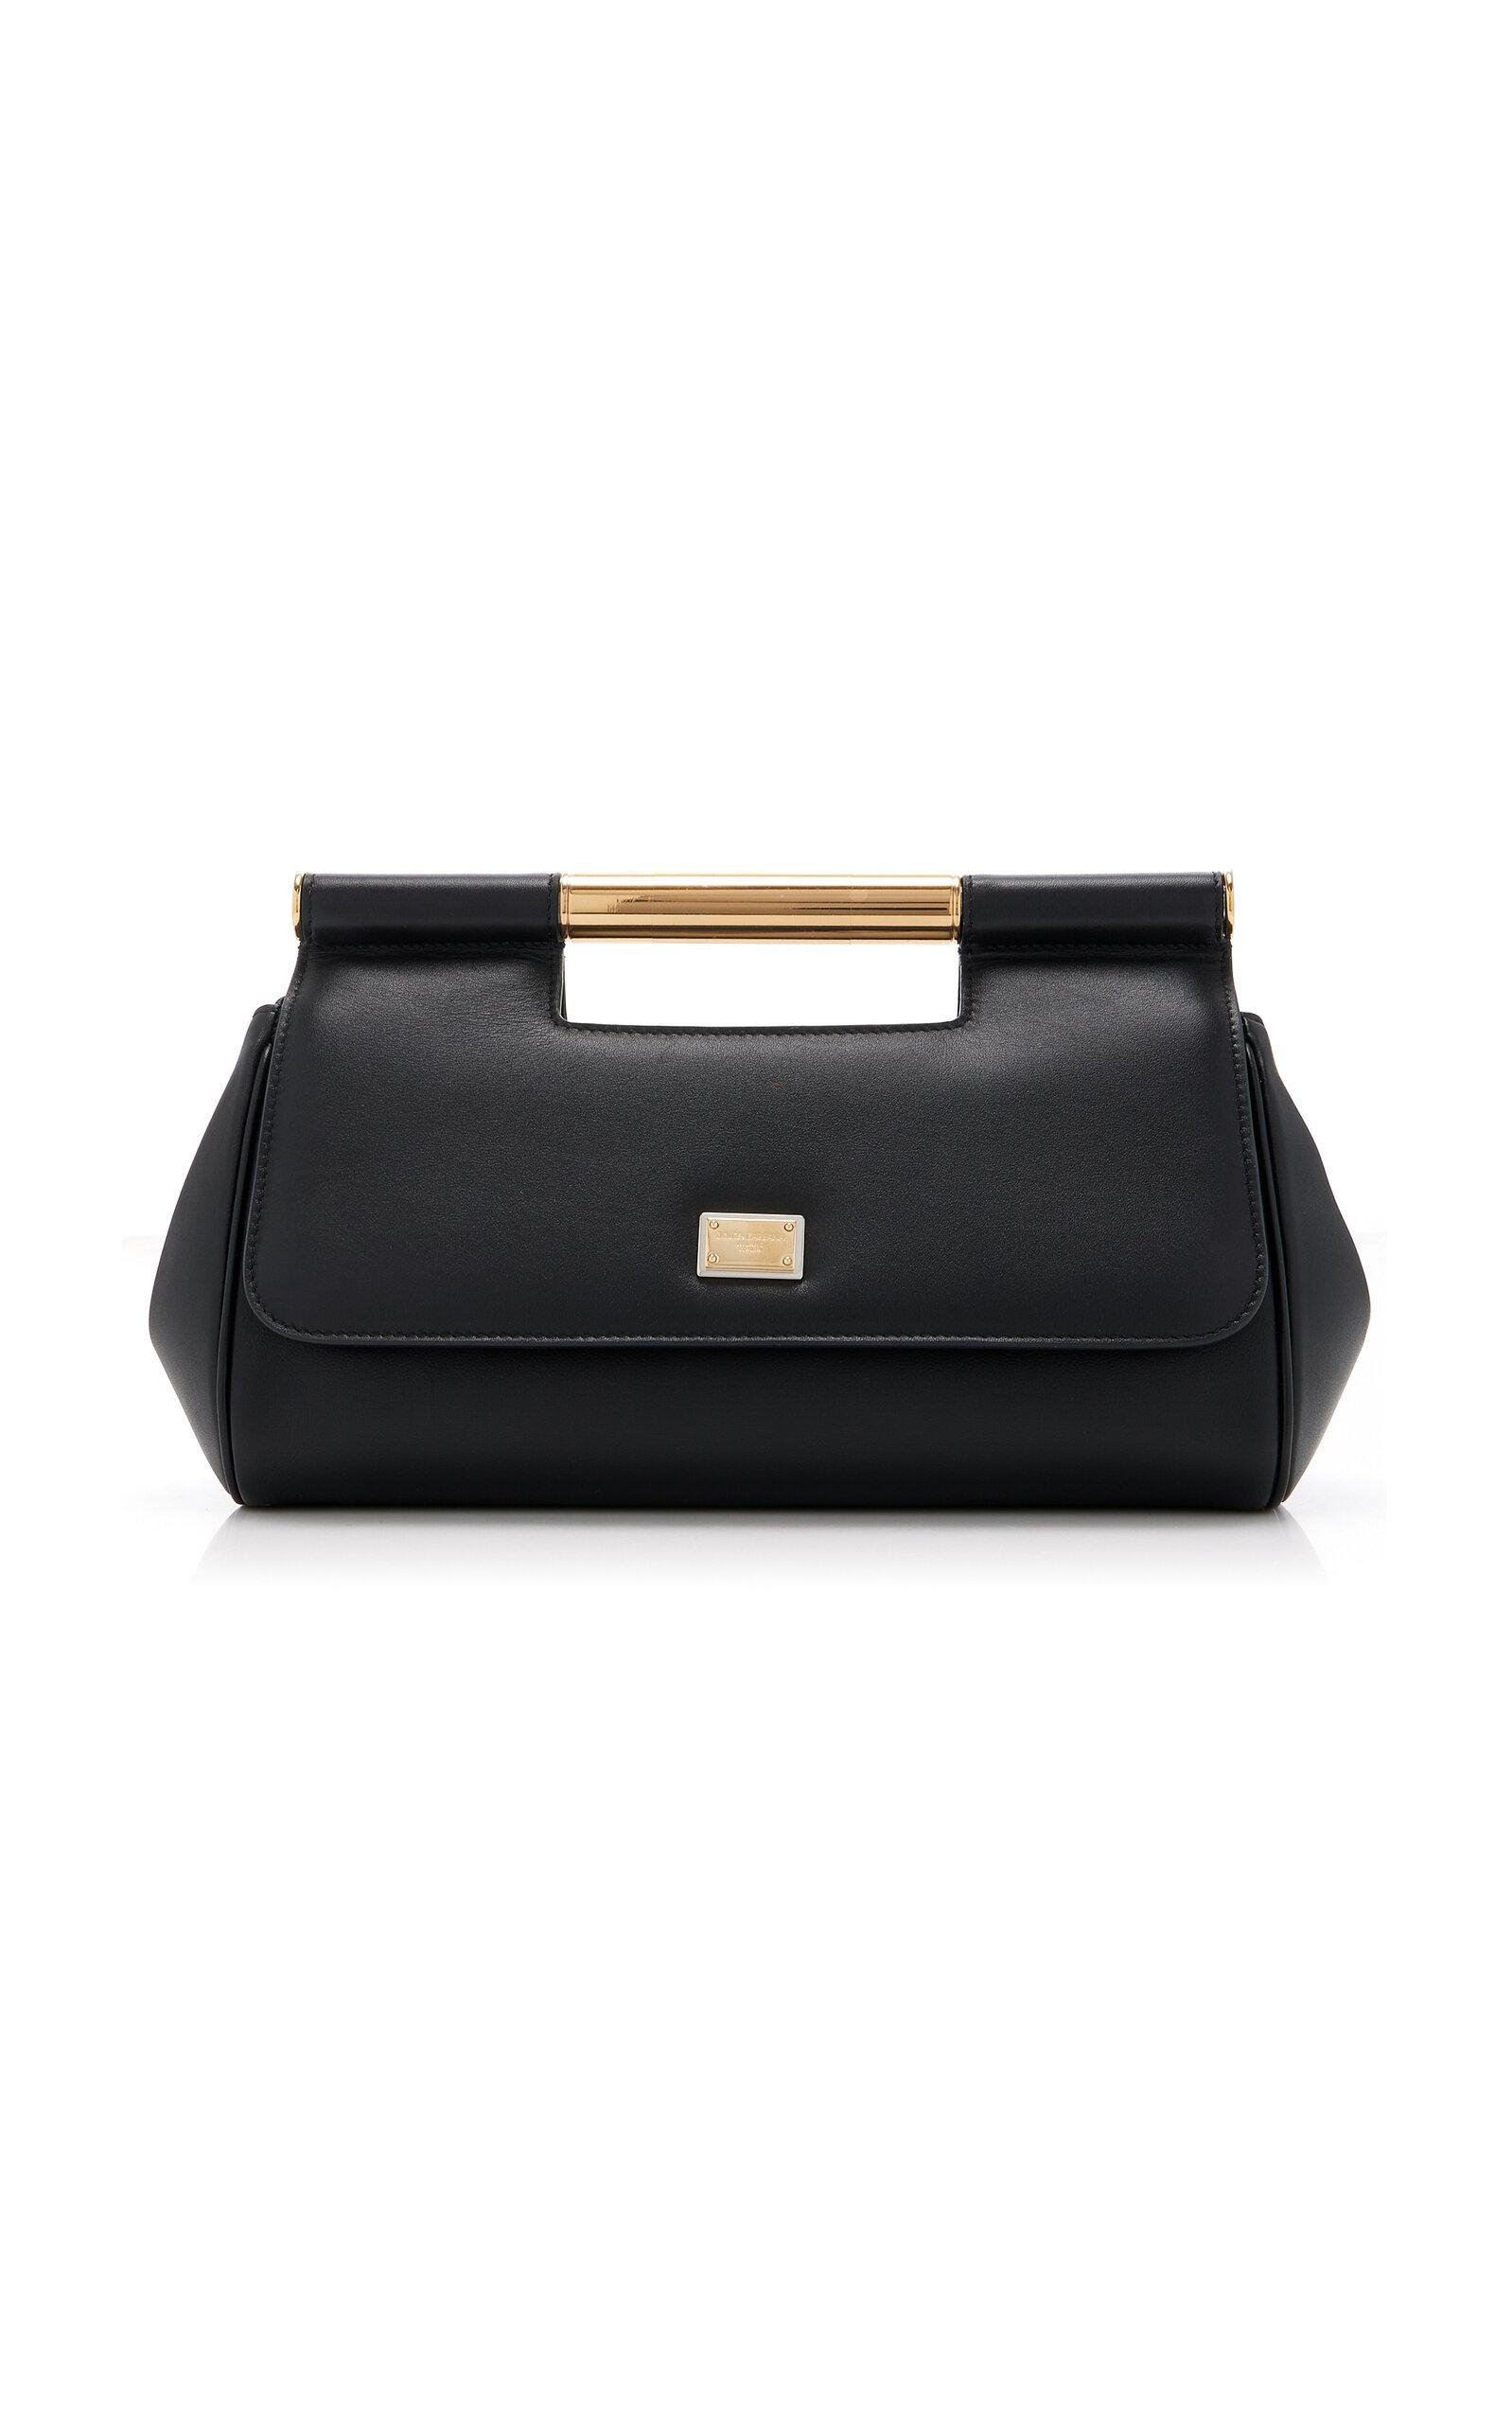 Dolce & Gabbana - Medium Sicily Leather Clutch - Black - OS - Moda Operandi by DOLCE&GABBANA